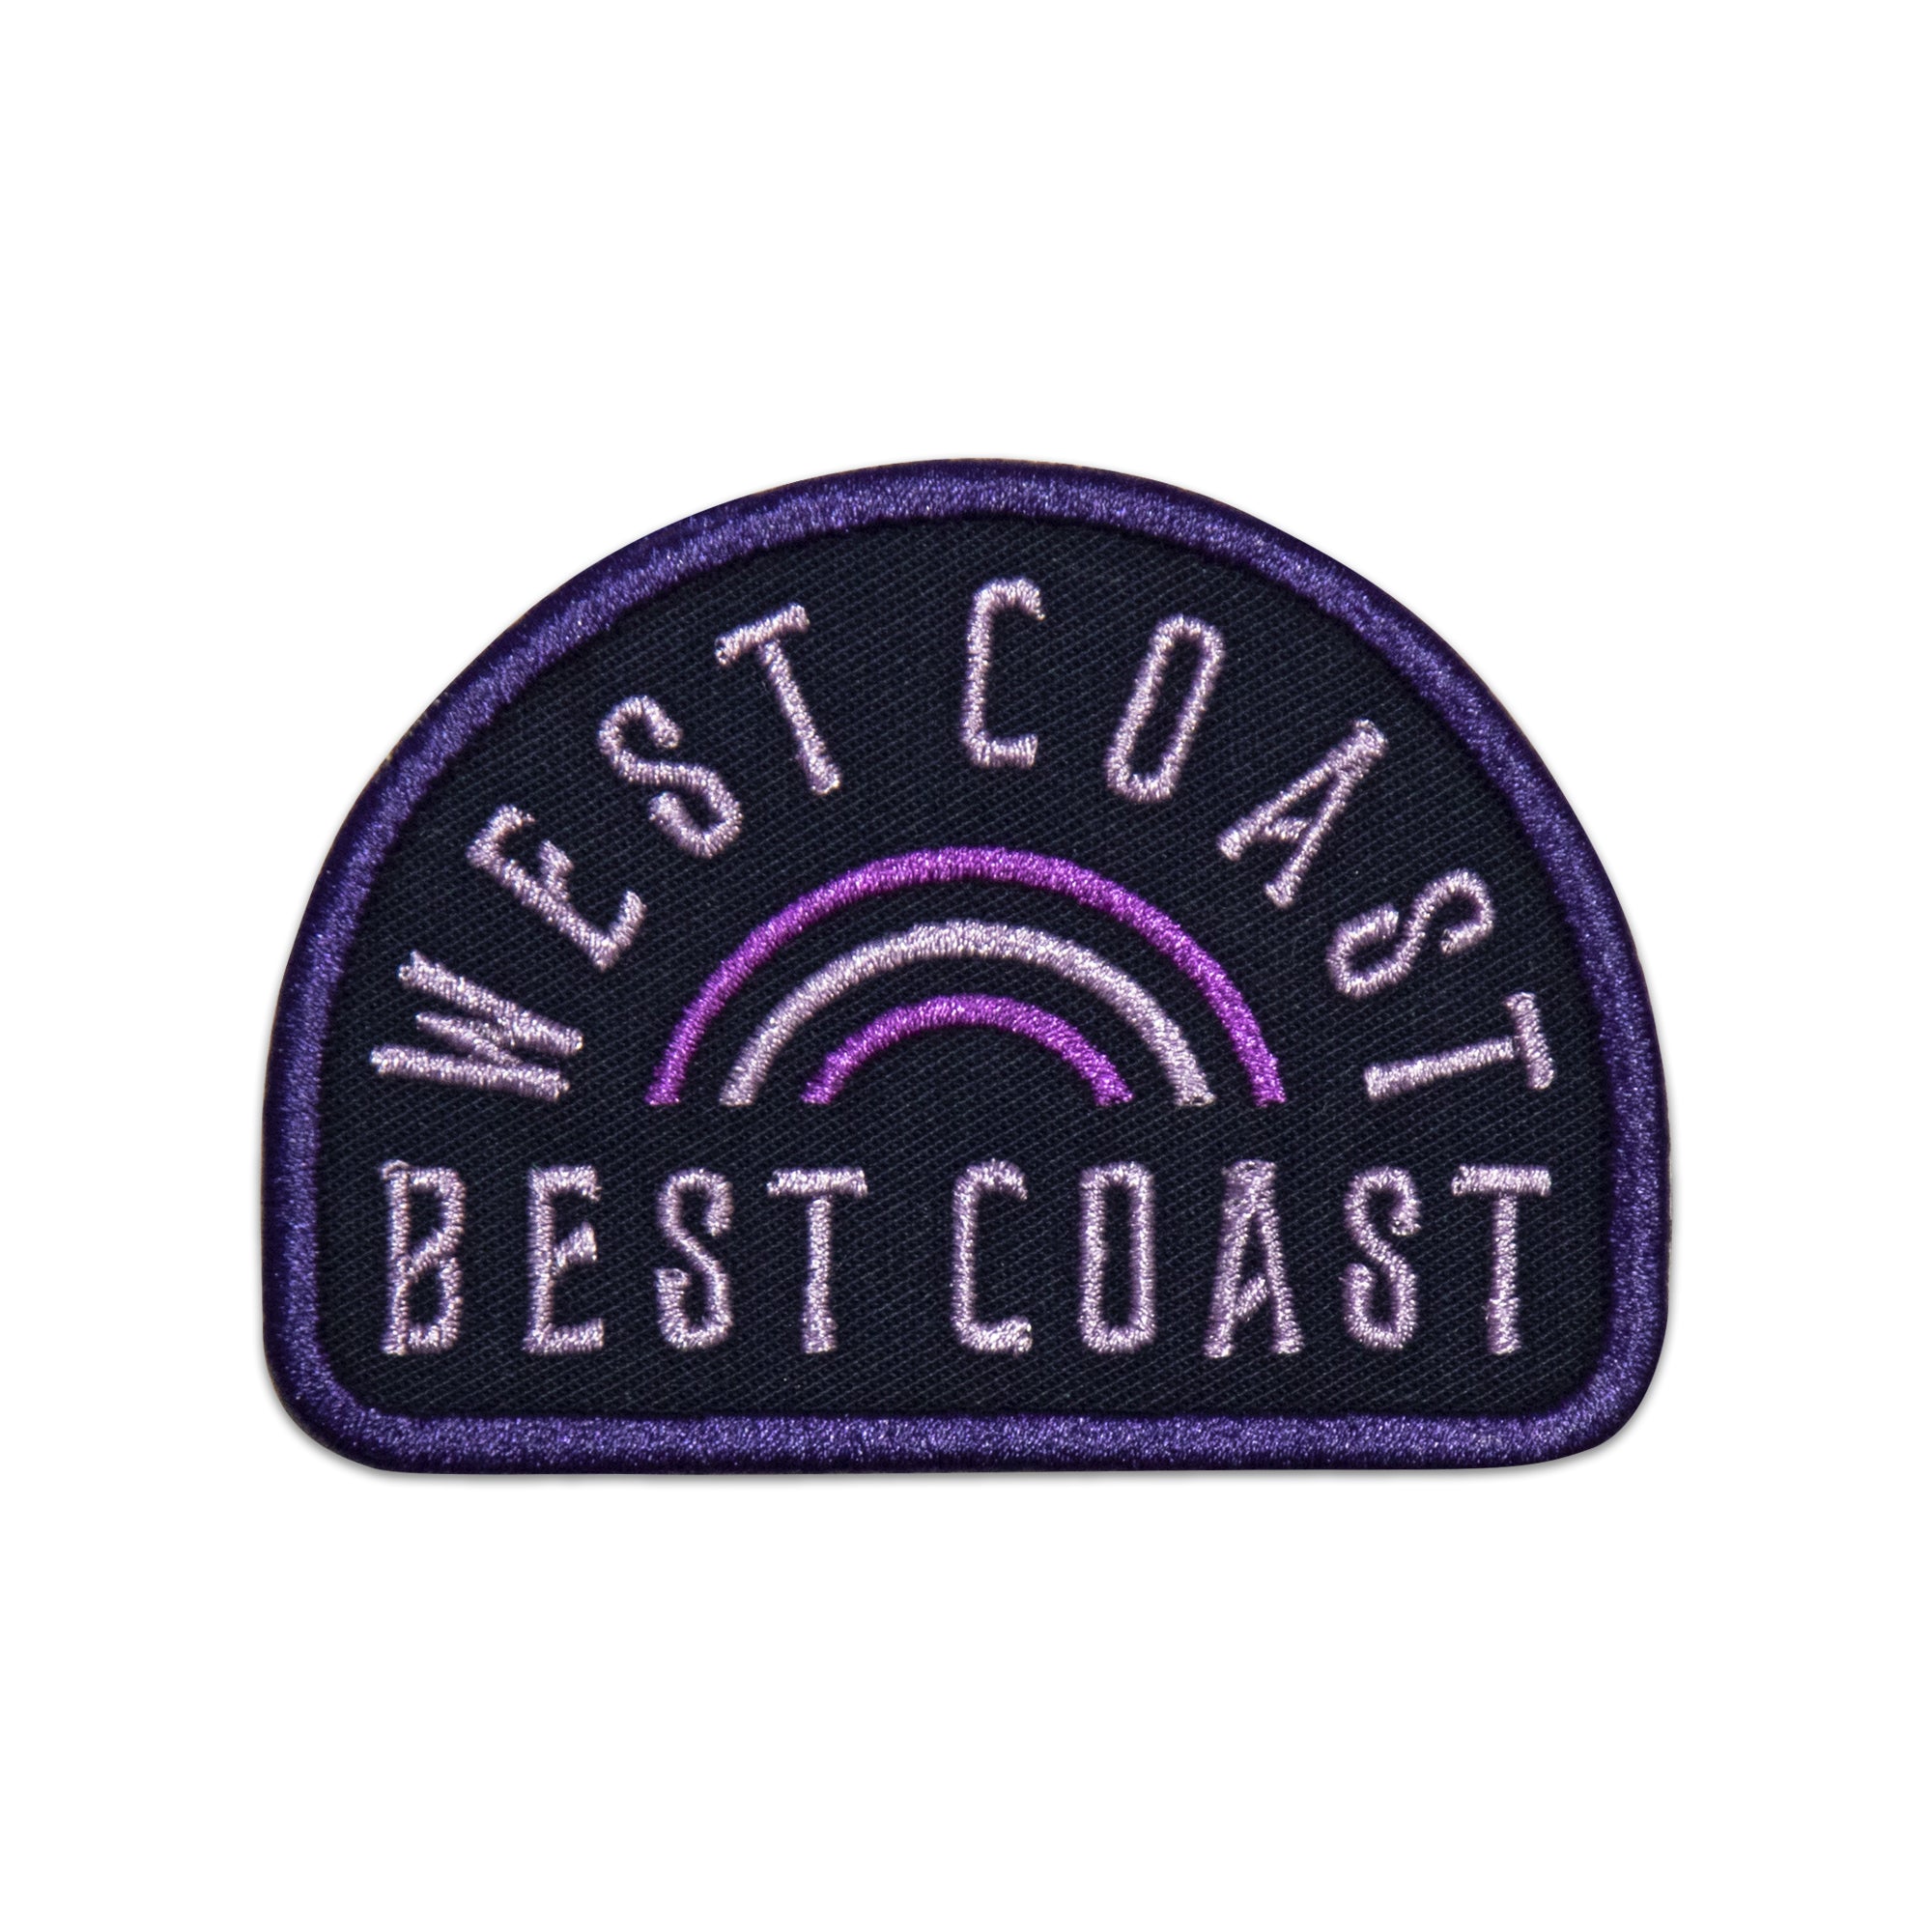 Best Coast Patch